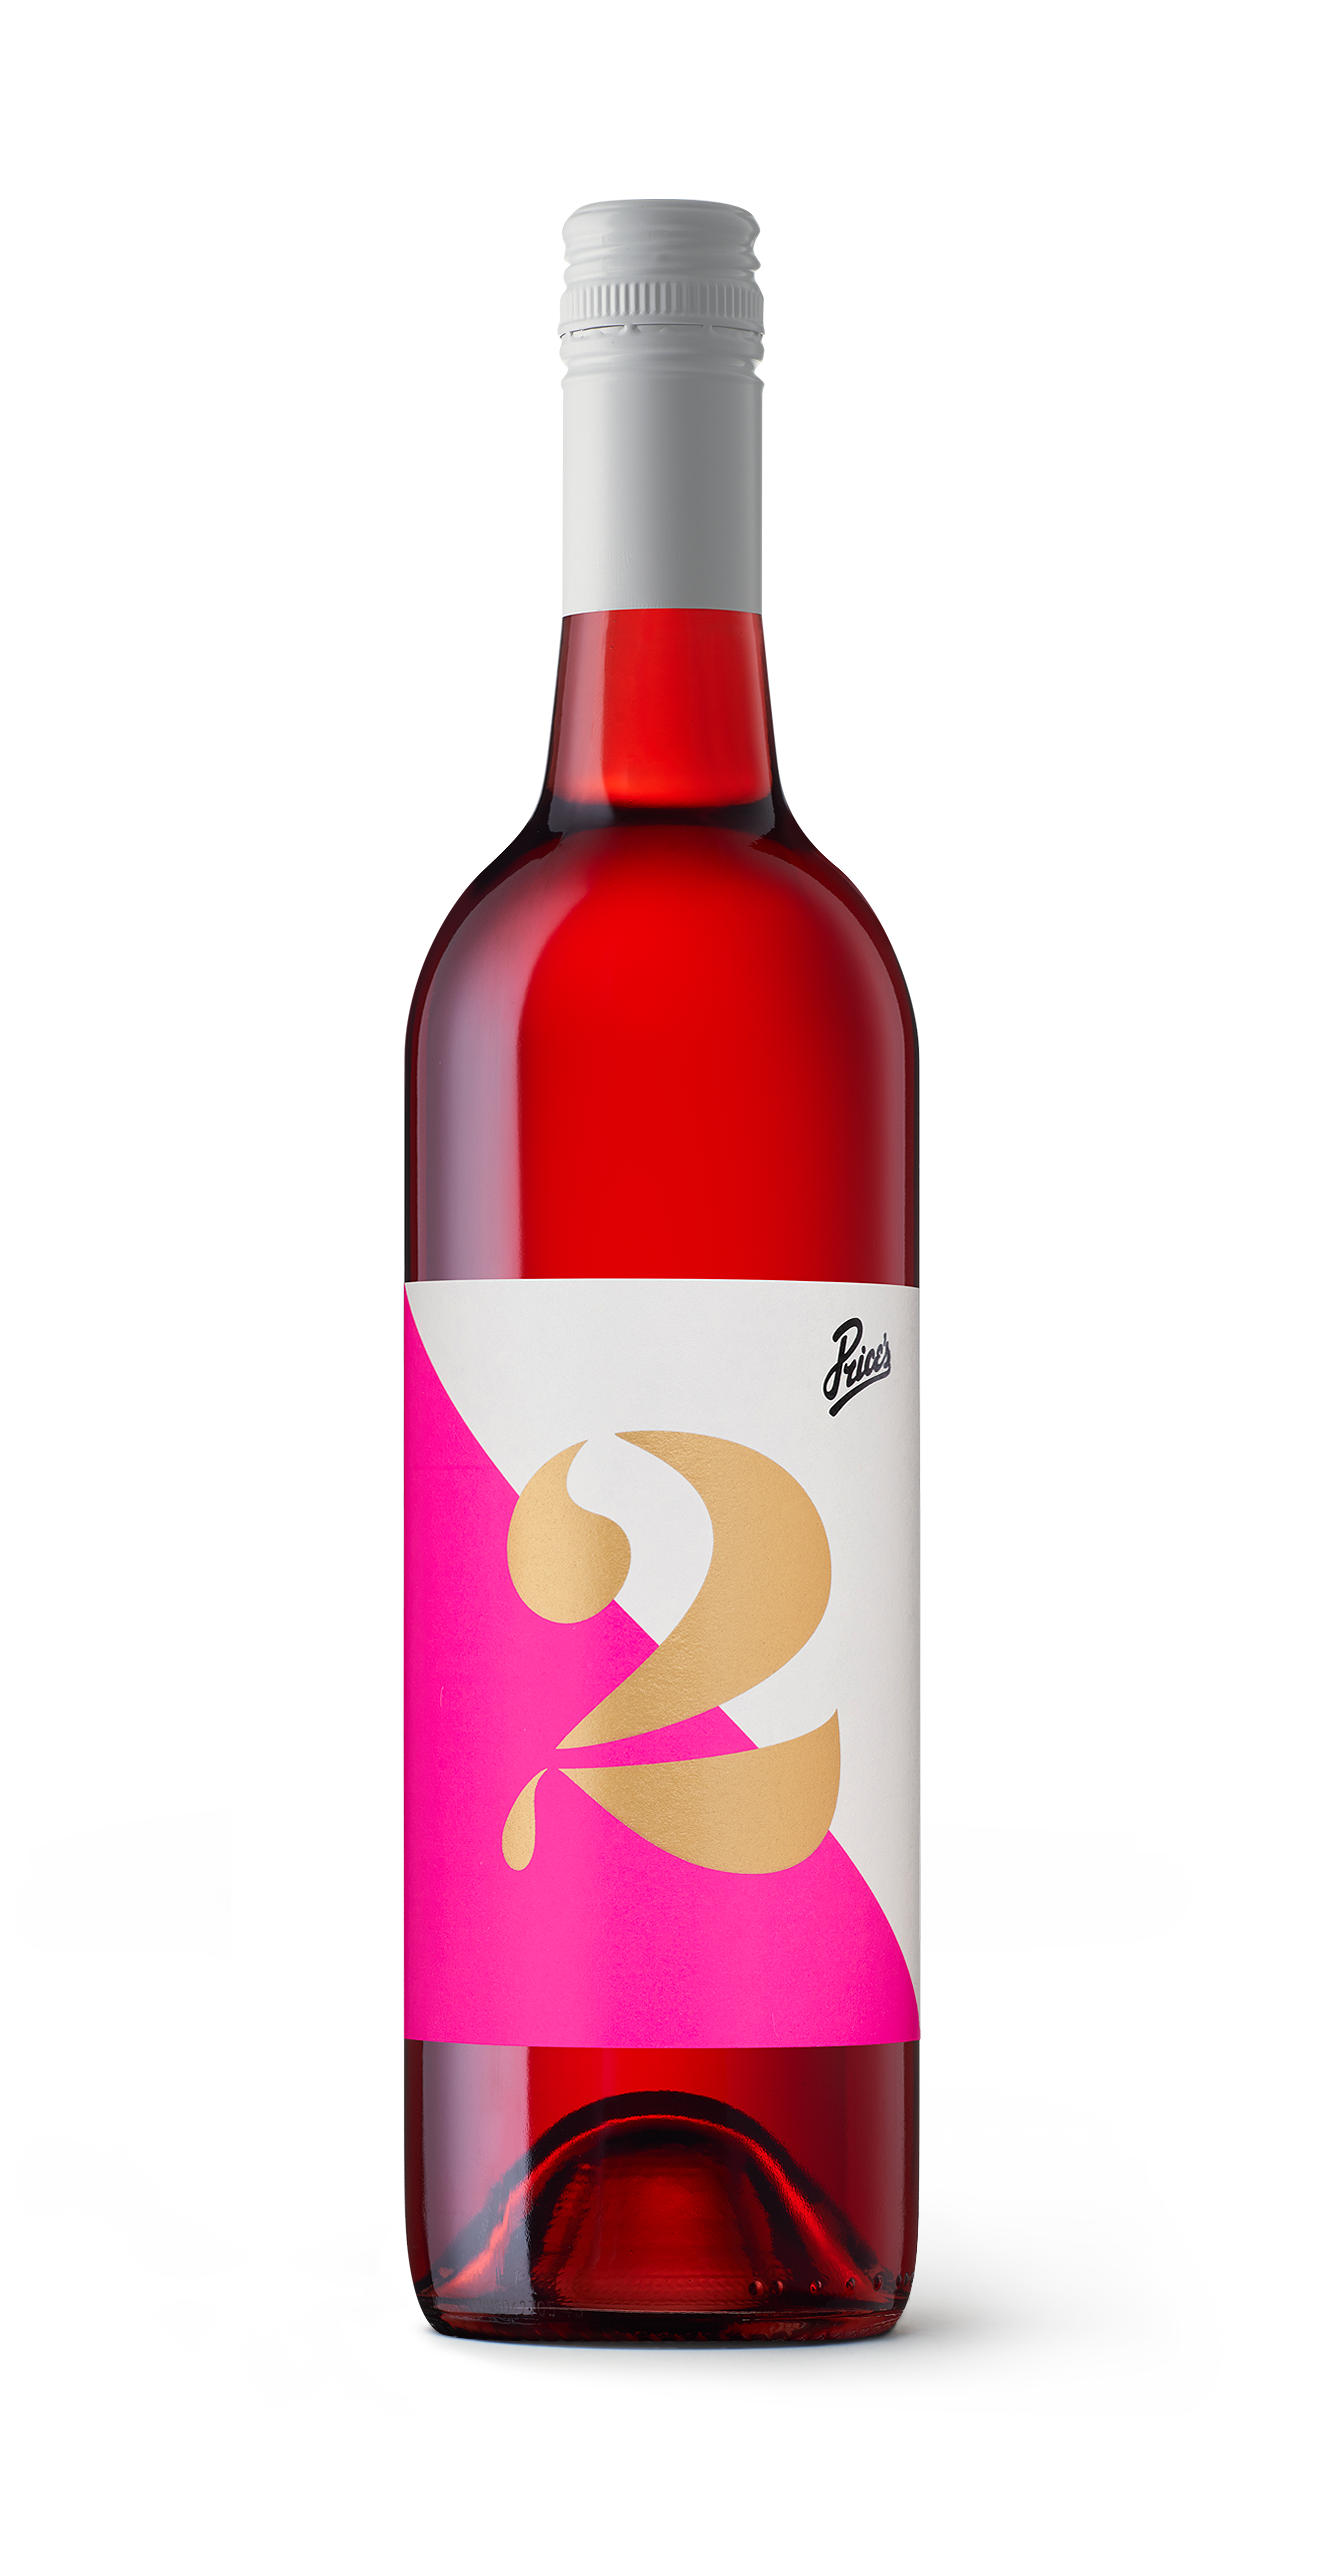 2022 Block 2 Alicante Bouschet Rosé wine bottle with vibrant magenta label design.